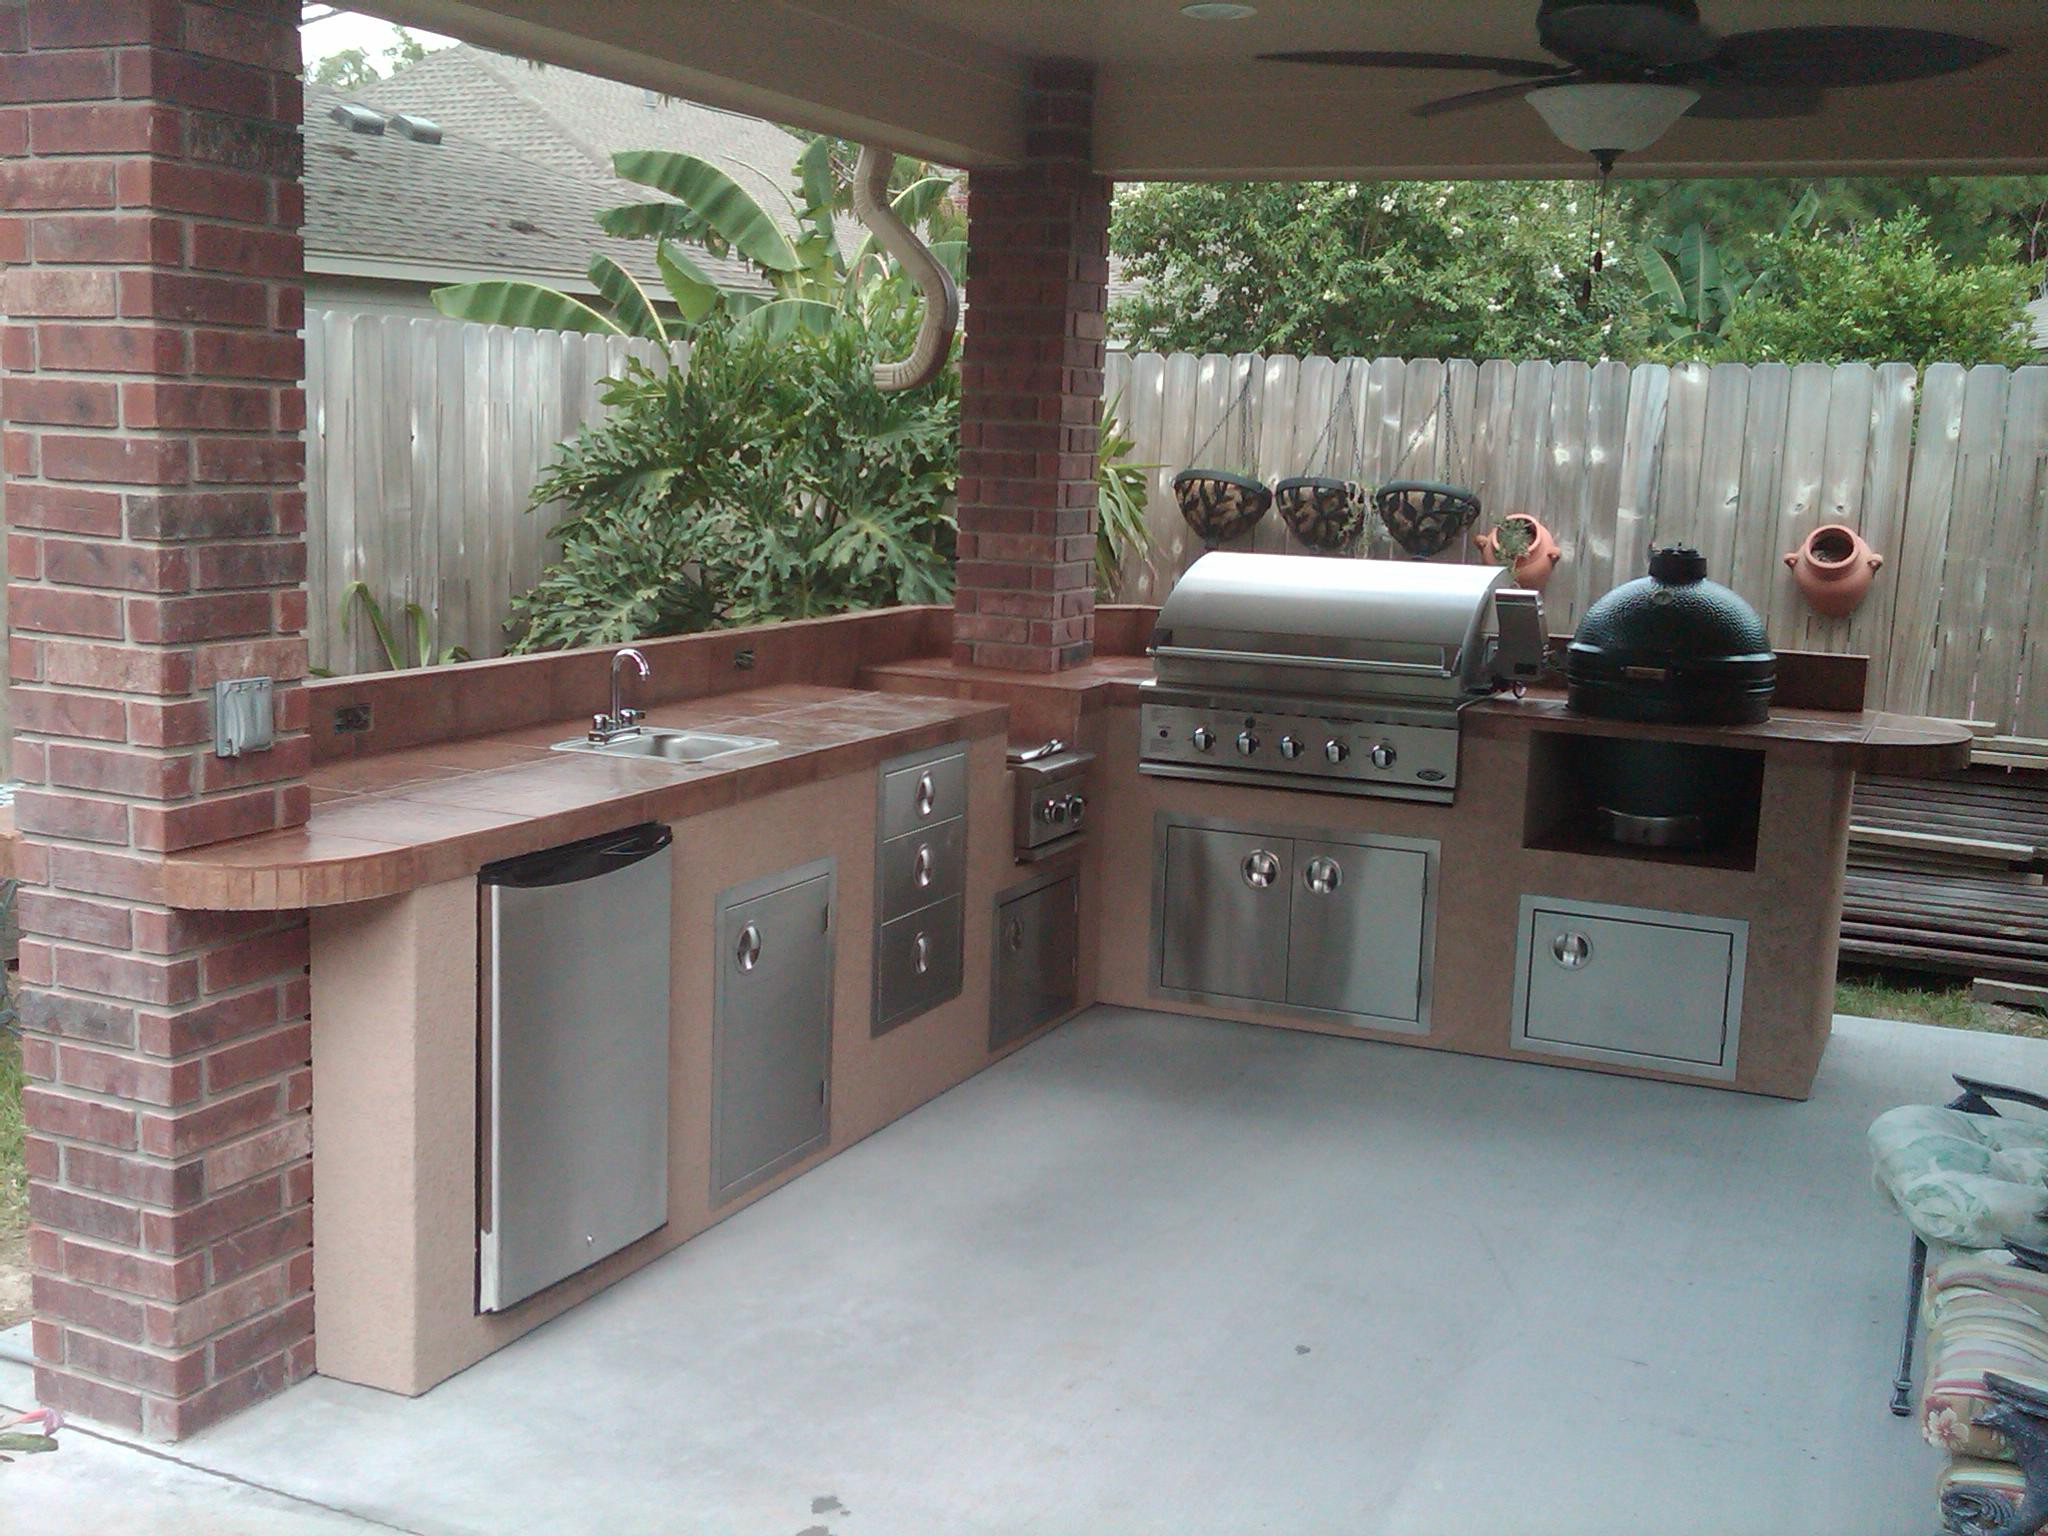 Outdoor Kitchen Gas Grills
 Outdoor Kitchen Deep Fryer Built In